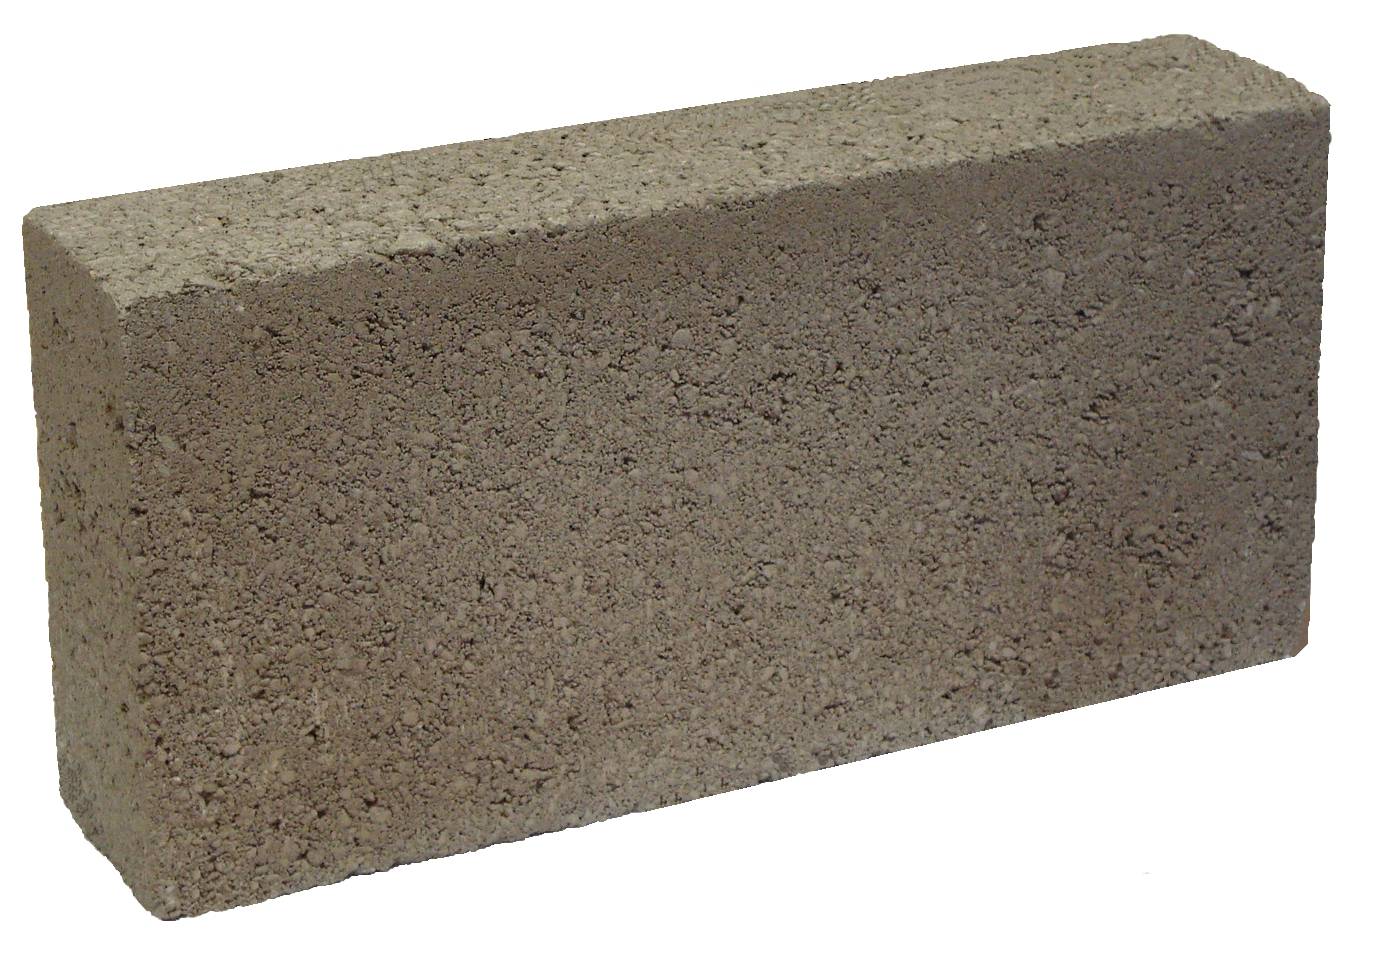 Solid Dense Concrete Block